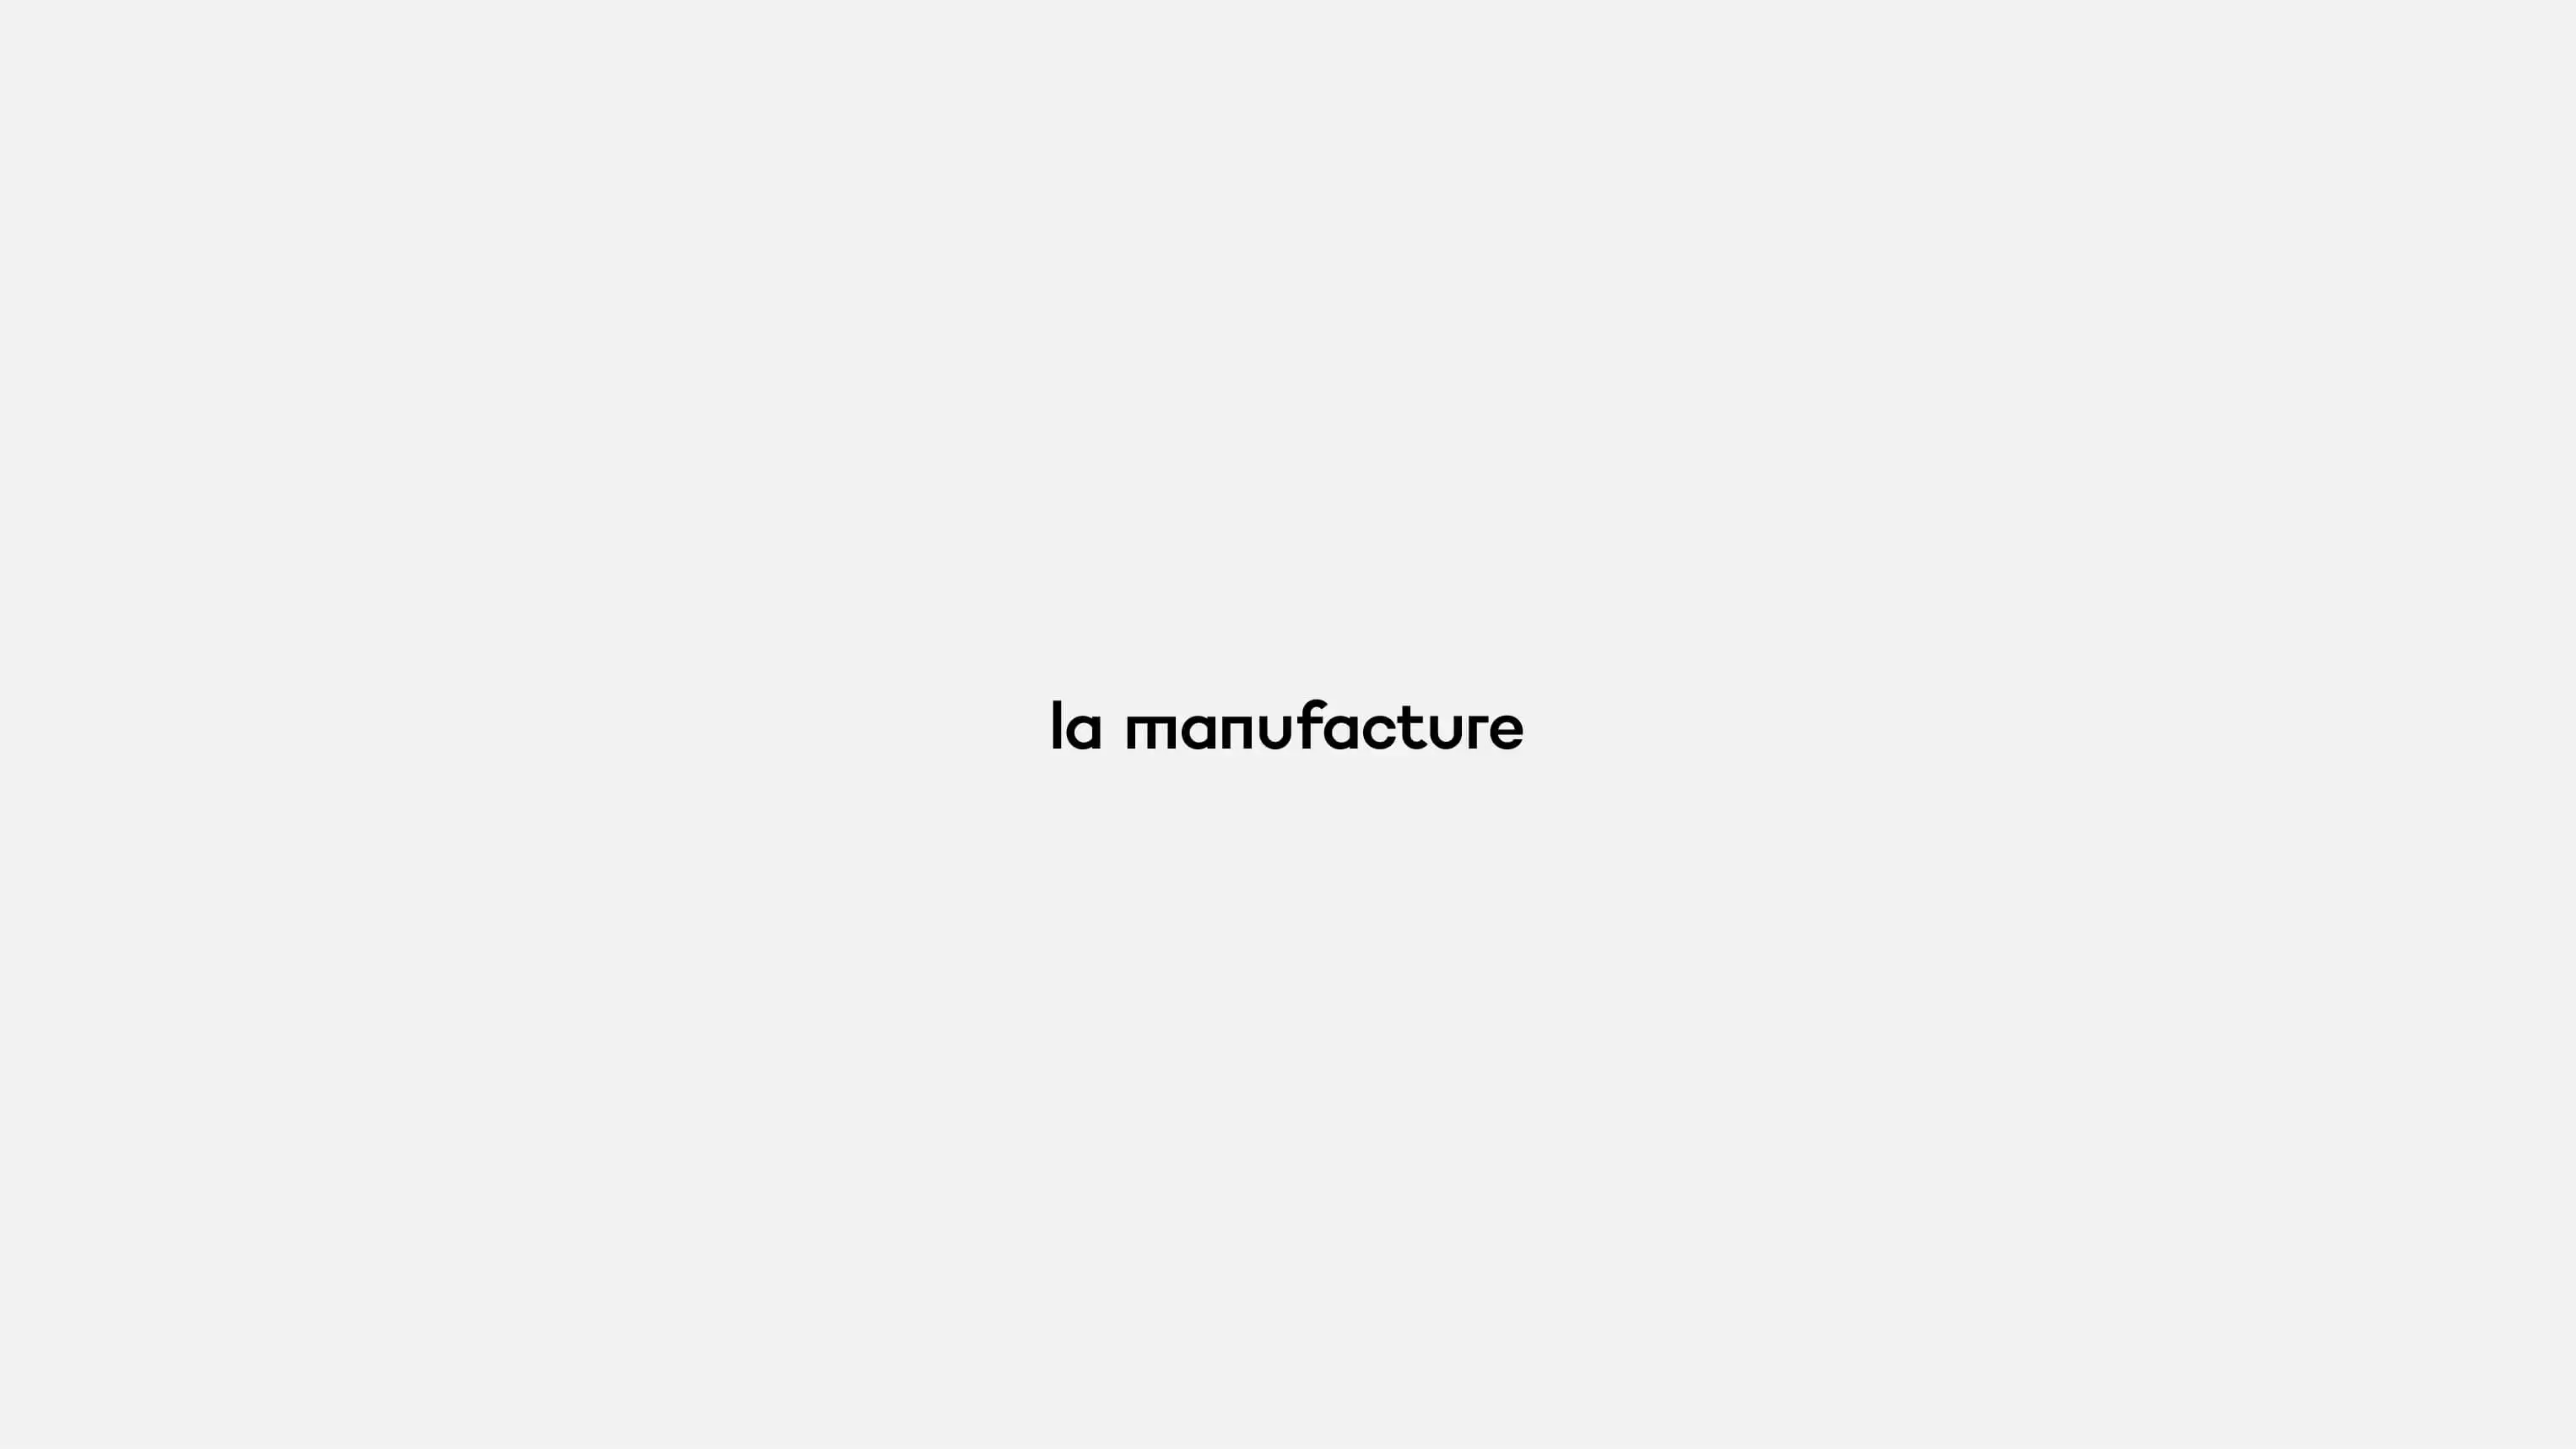 La Manufacture's logotype